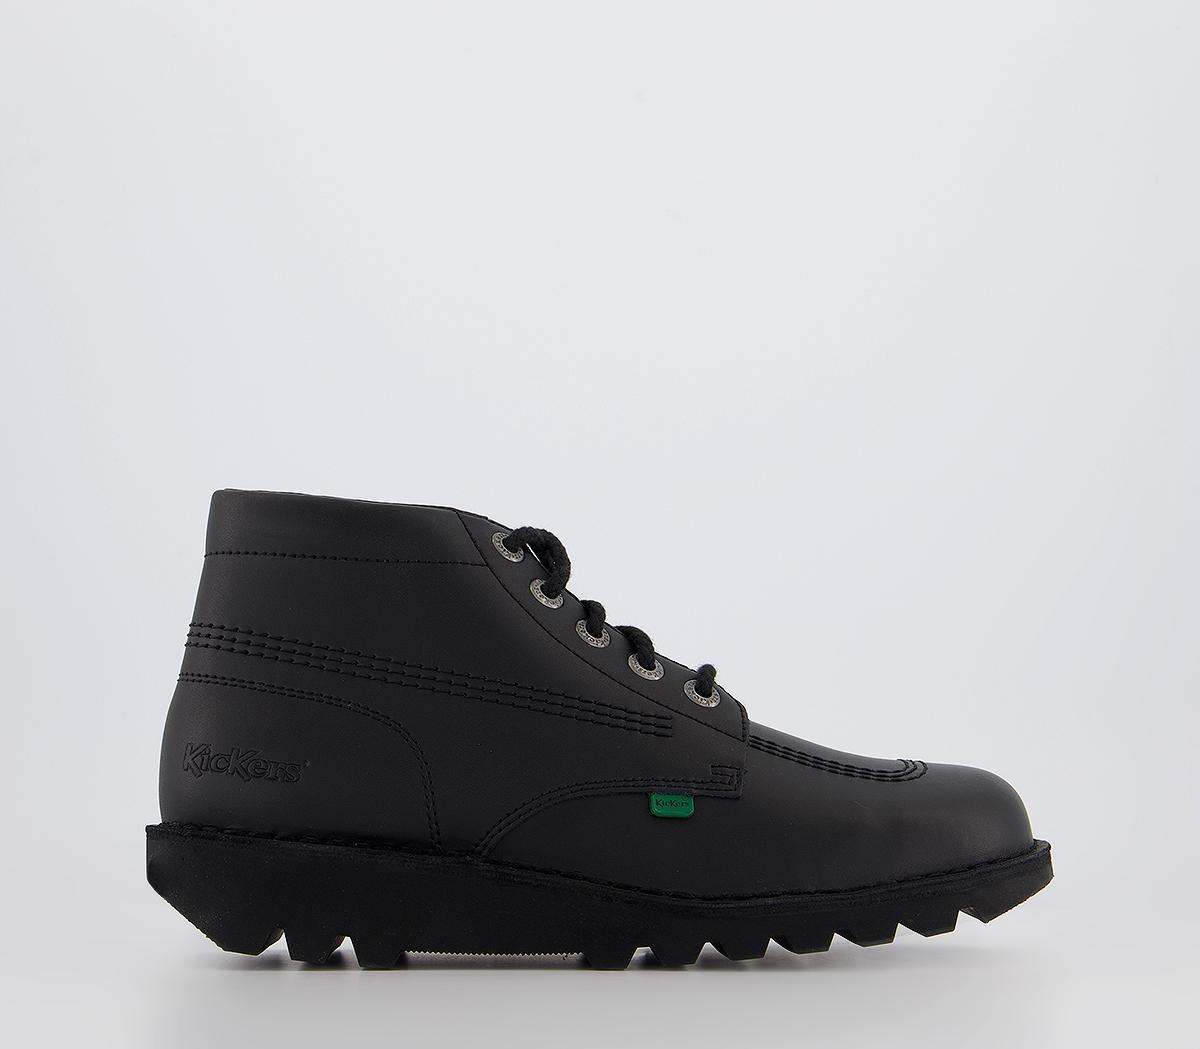 KickersKick Hi Boots Black Leather